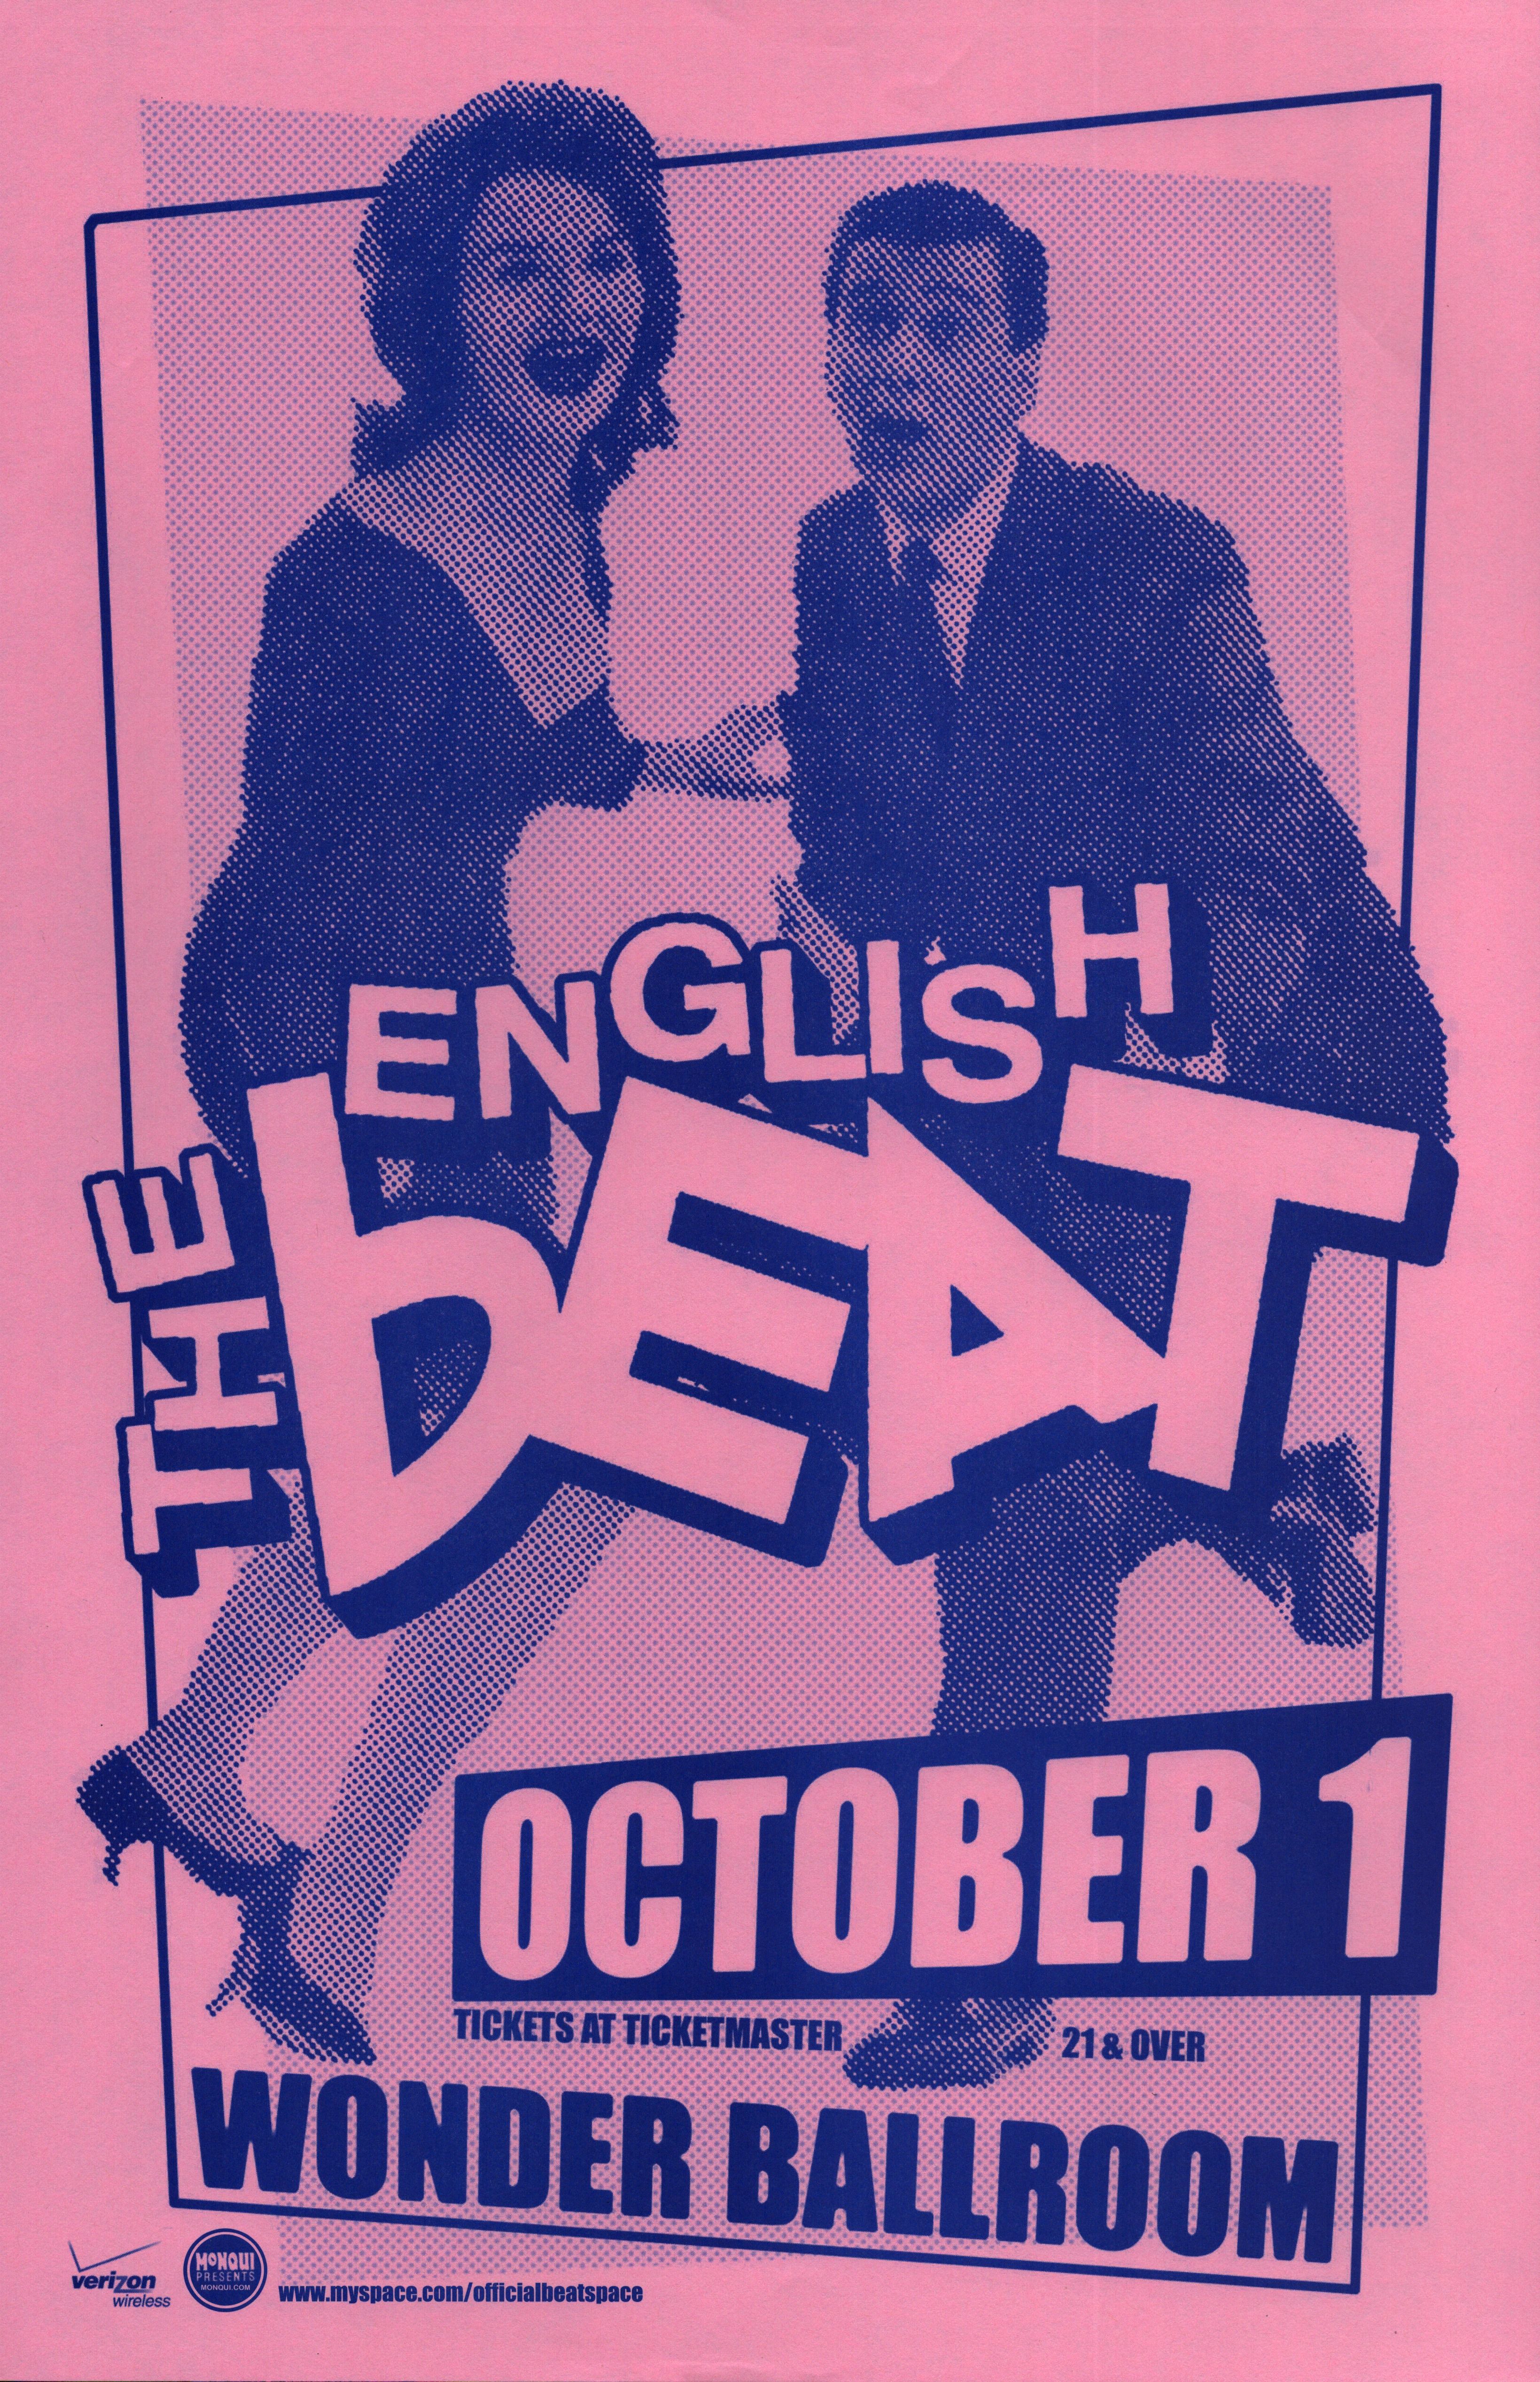 MXP-140.26 English Beat Wonder Ballroom 2009 Concert Poster